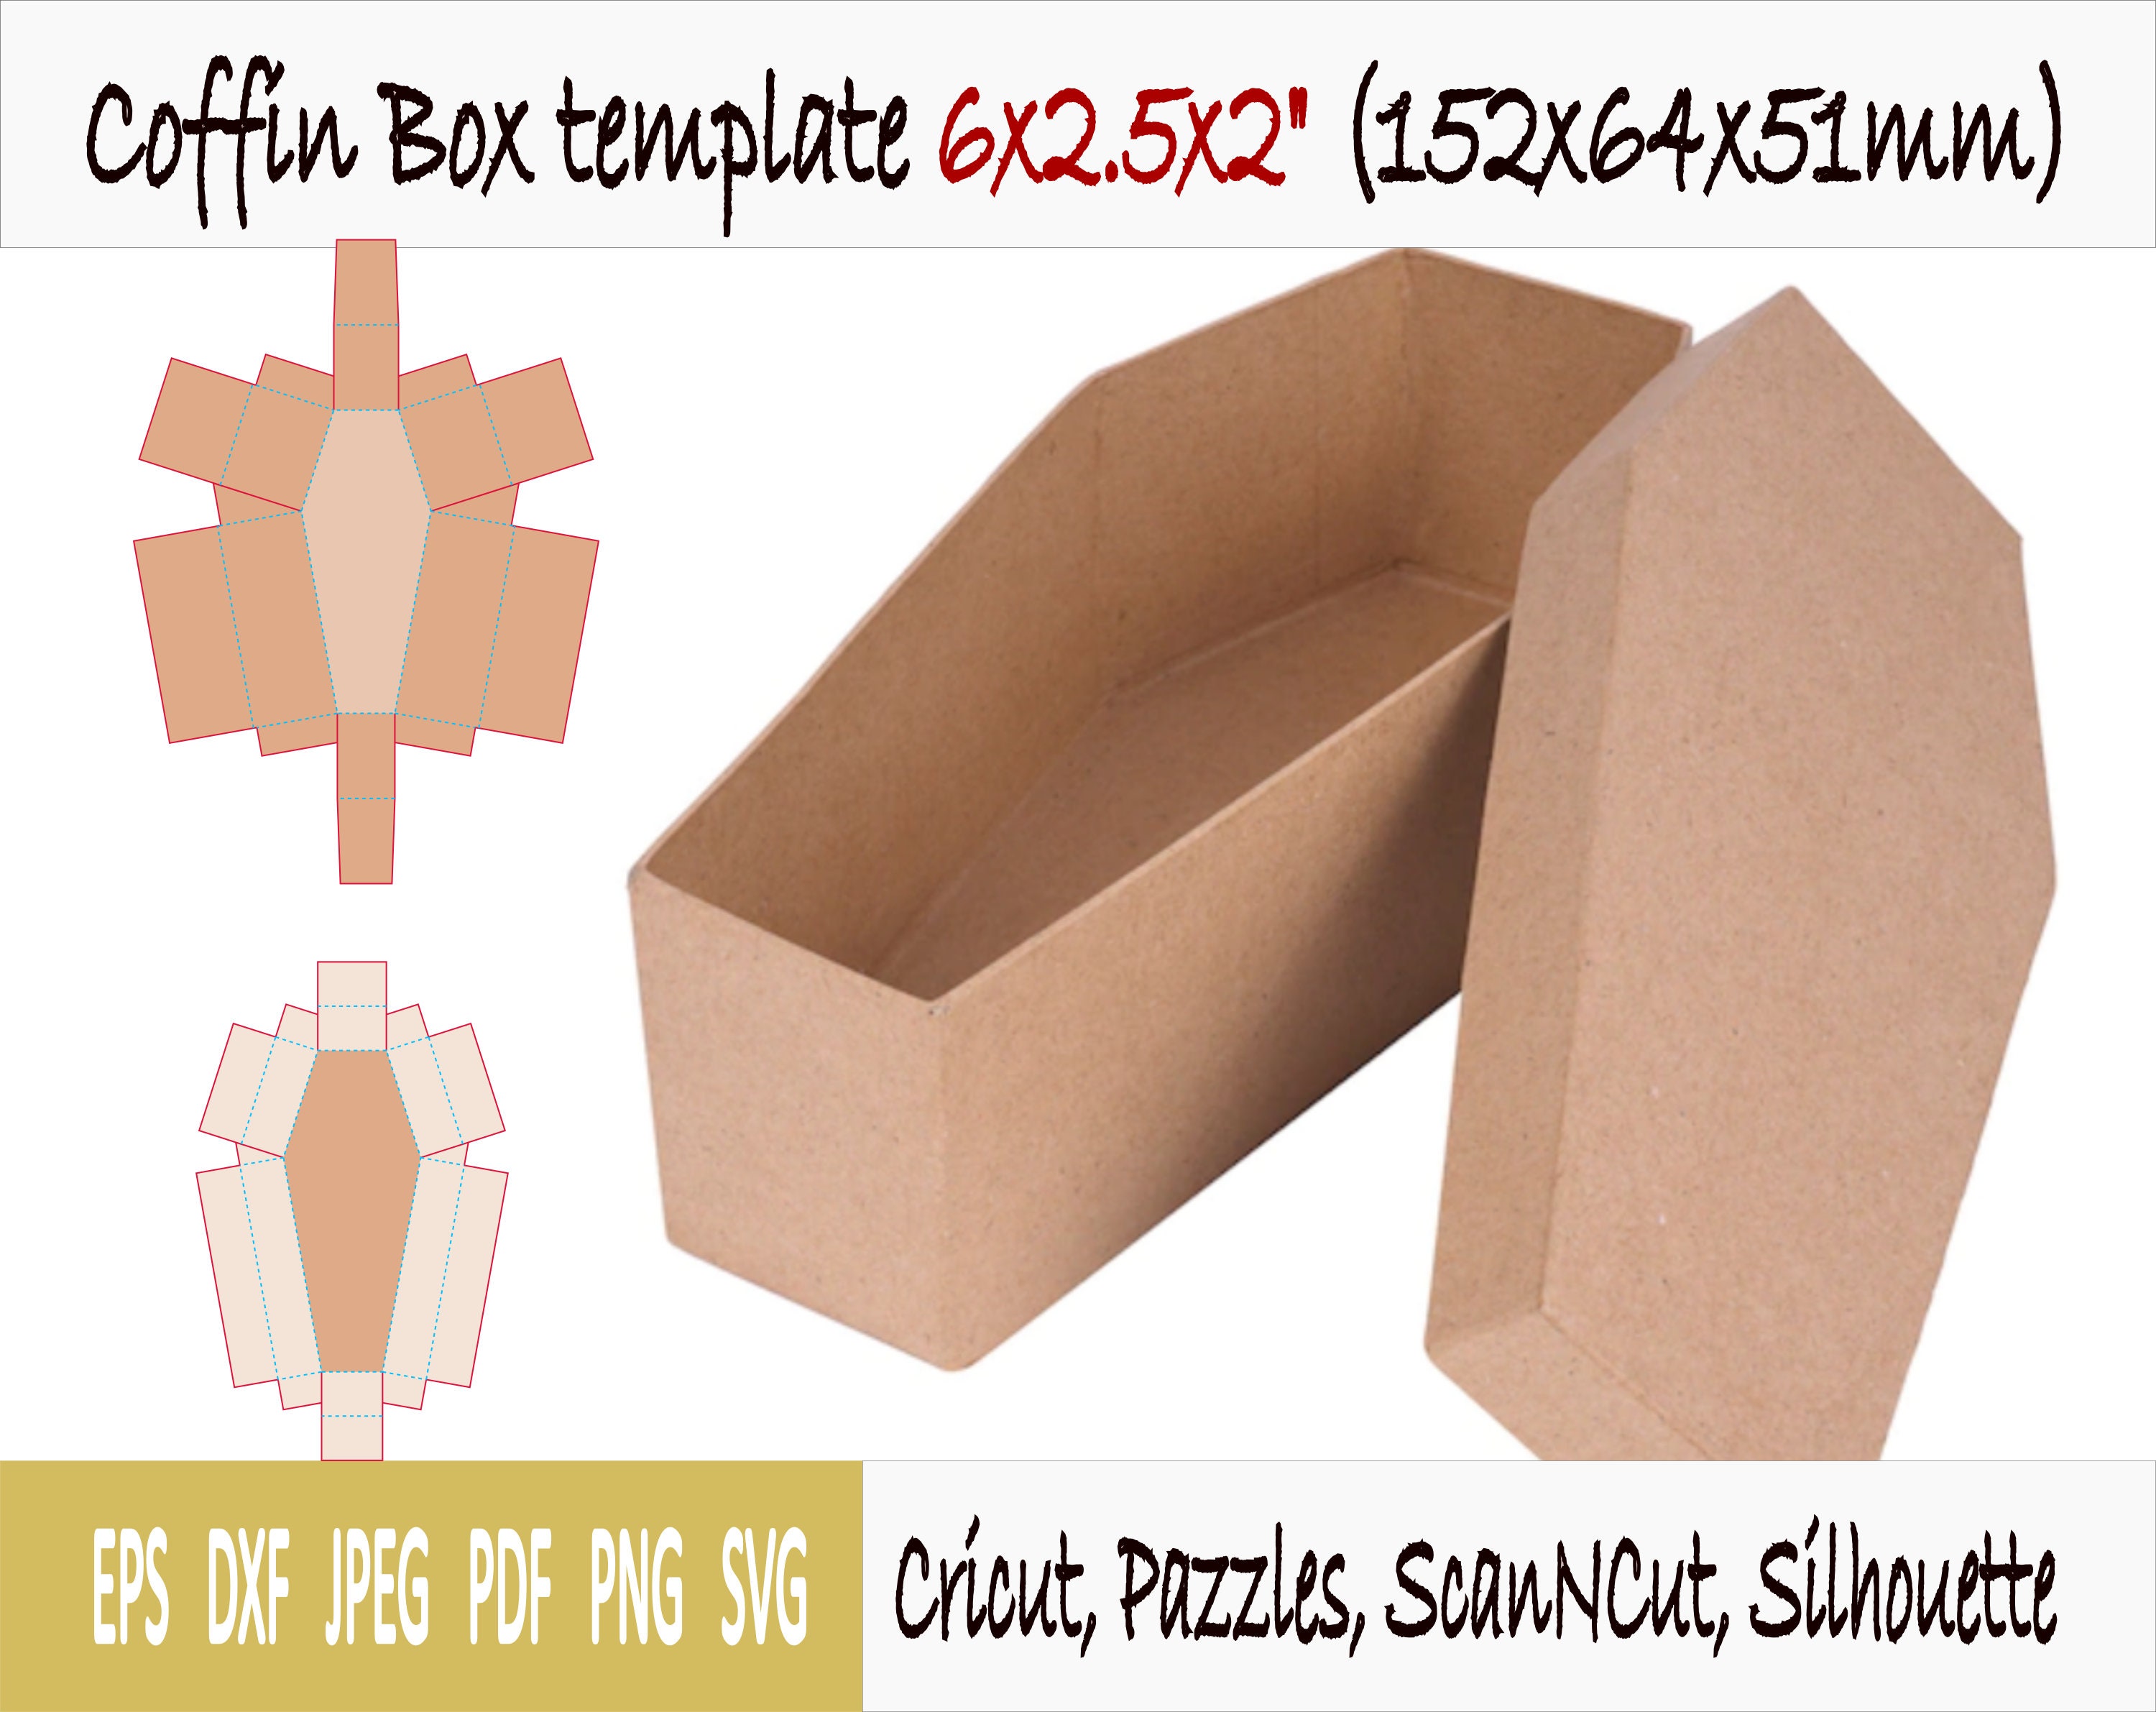 coffin-box-template-6x2-5x2-sarcophagus-paper-gift-favor-etsy-australia